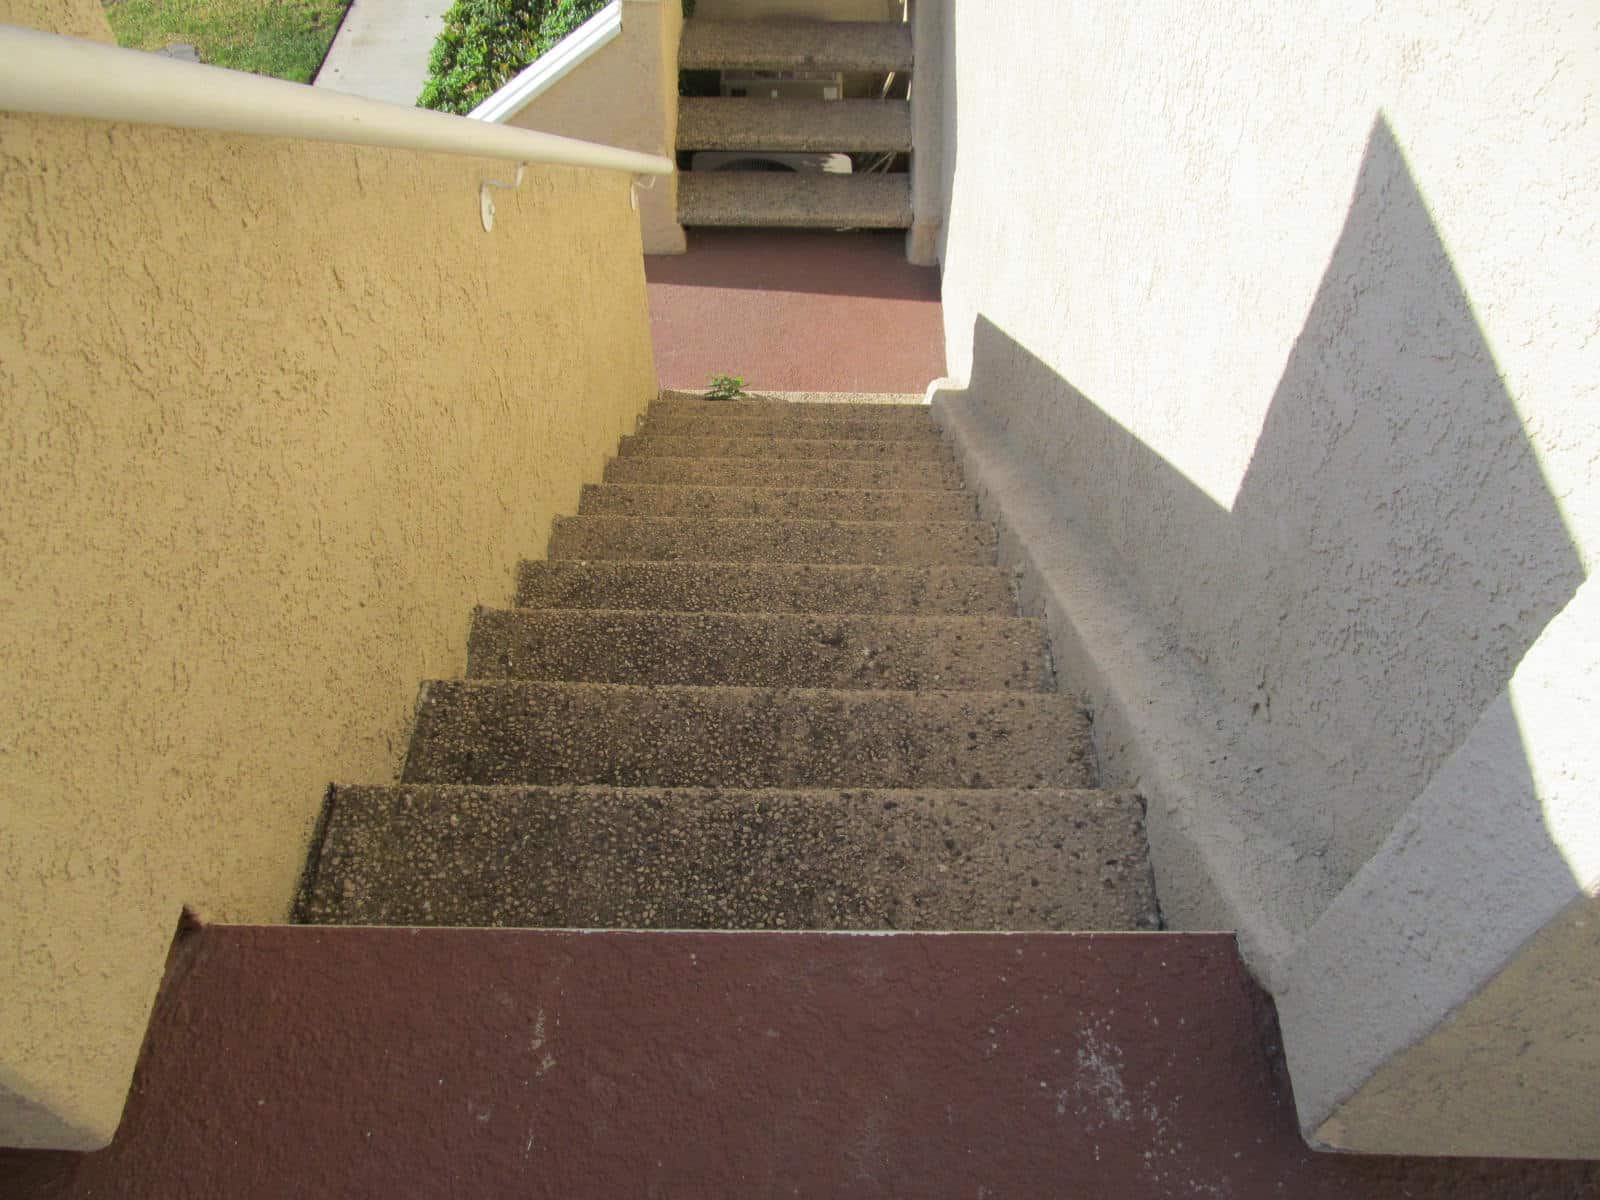 Stairs missing railing is hazardous